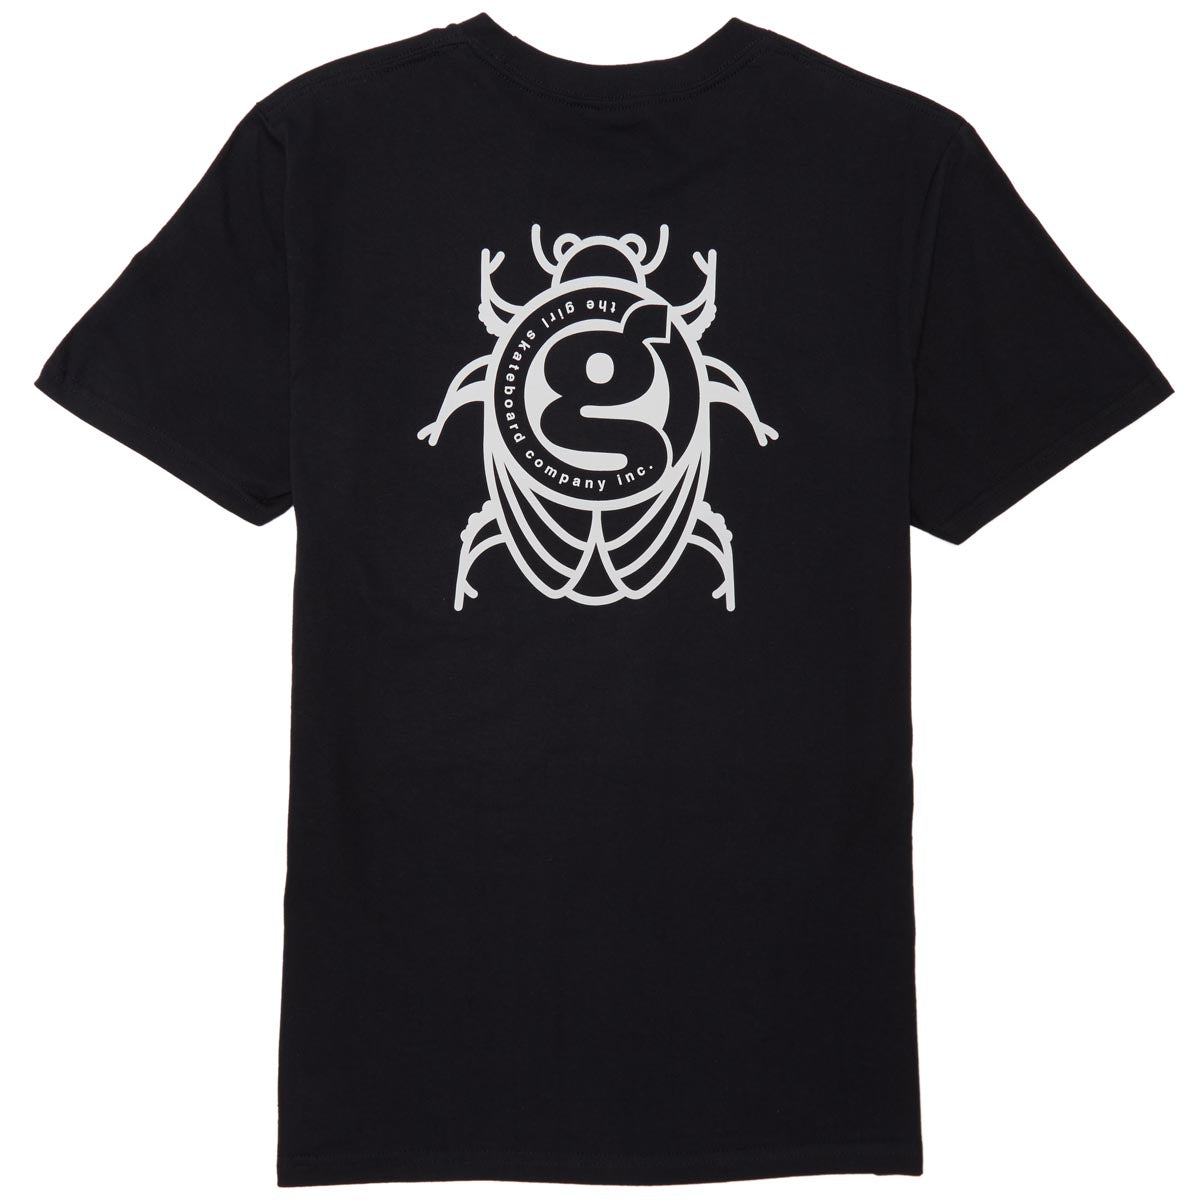 Girl Goth Beetle T-Shirt - Black image 1